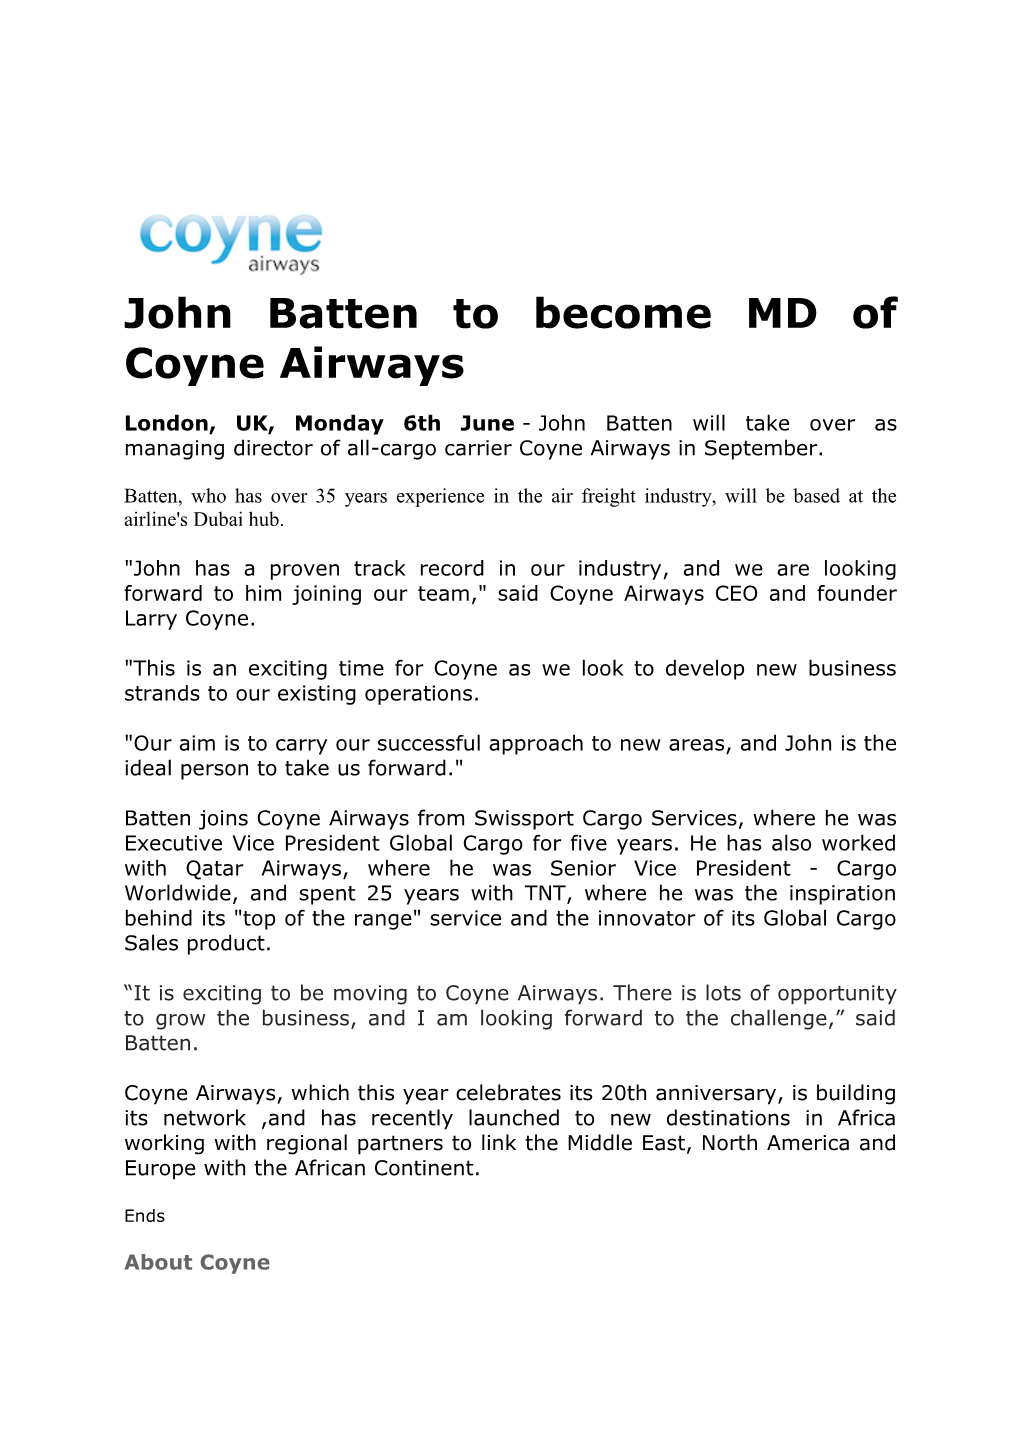 John Batten to Become MD of Coyne Airways